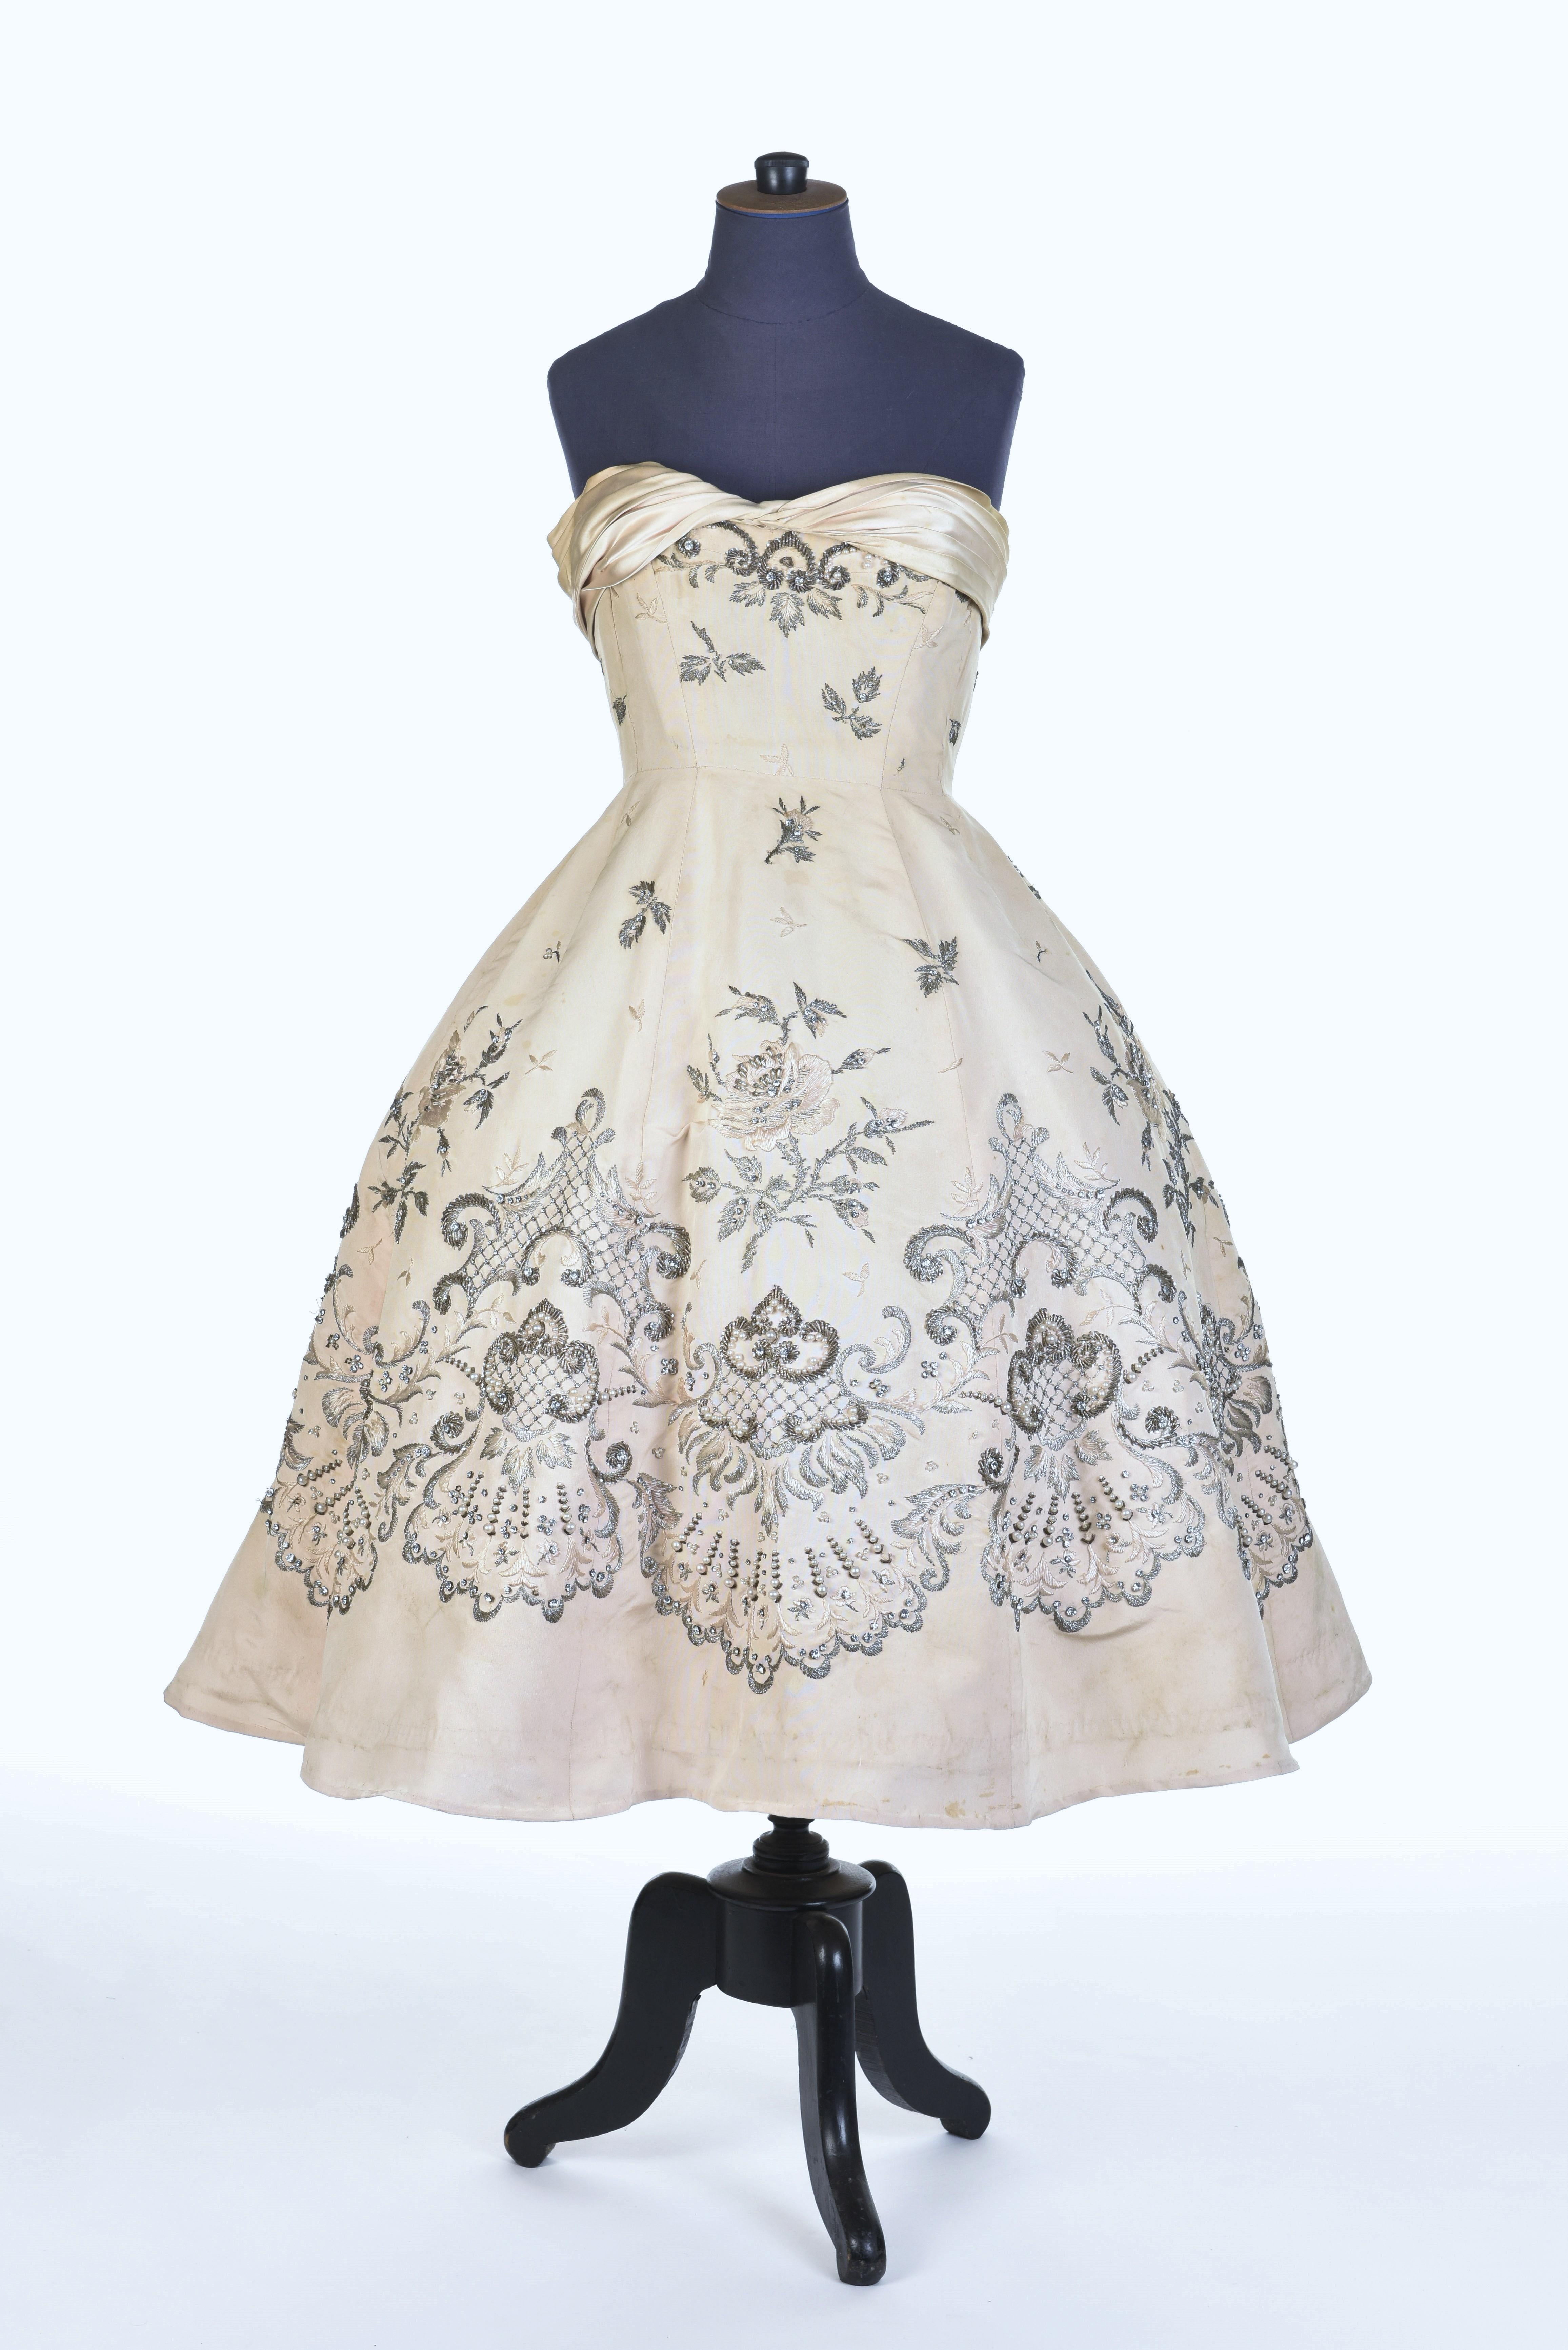 Women's A Pierre Balmain Couture Ballgown numbered 87681 in Cream Silk Circa 1955/1957